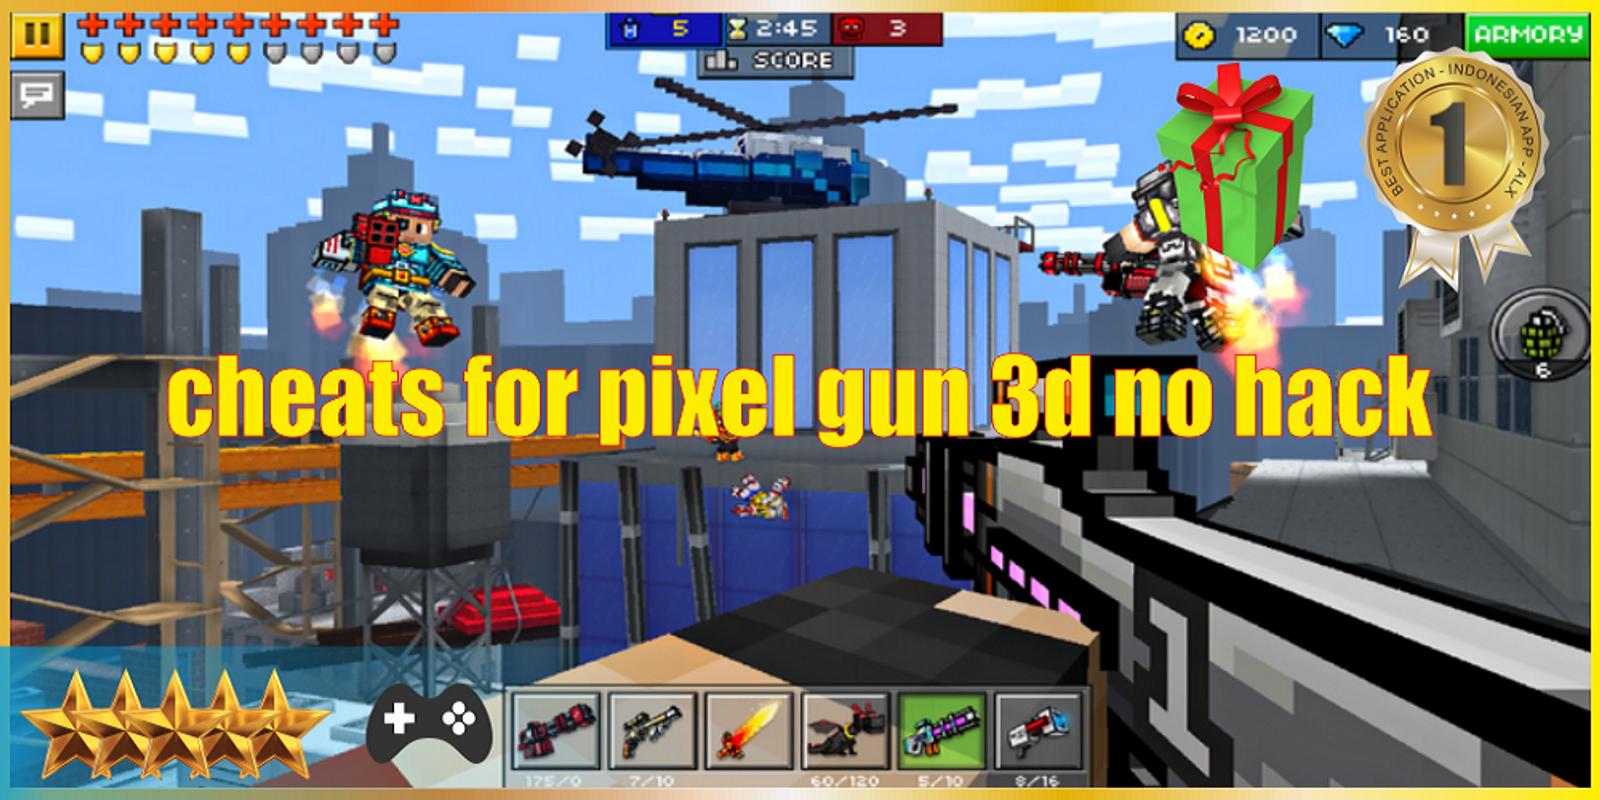 Pixel Gun 3d Hack